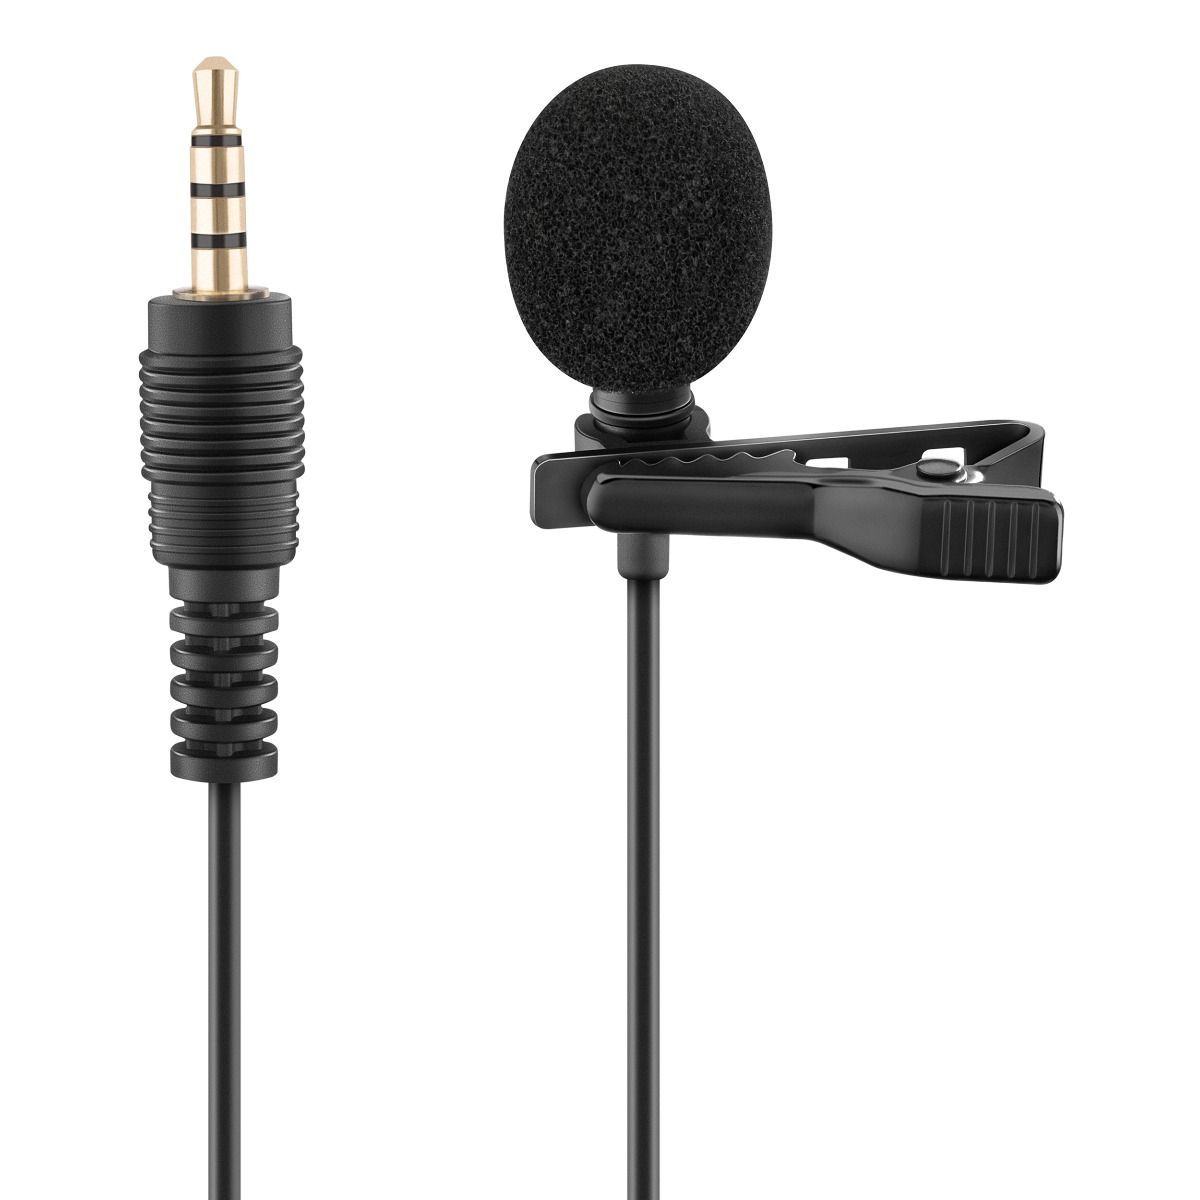 Micrófono Solapa Inalámbrico Plug 3.5mm Aux Bluetooth Conexión Sonido